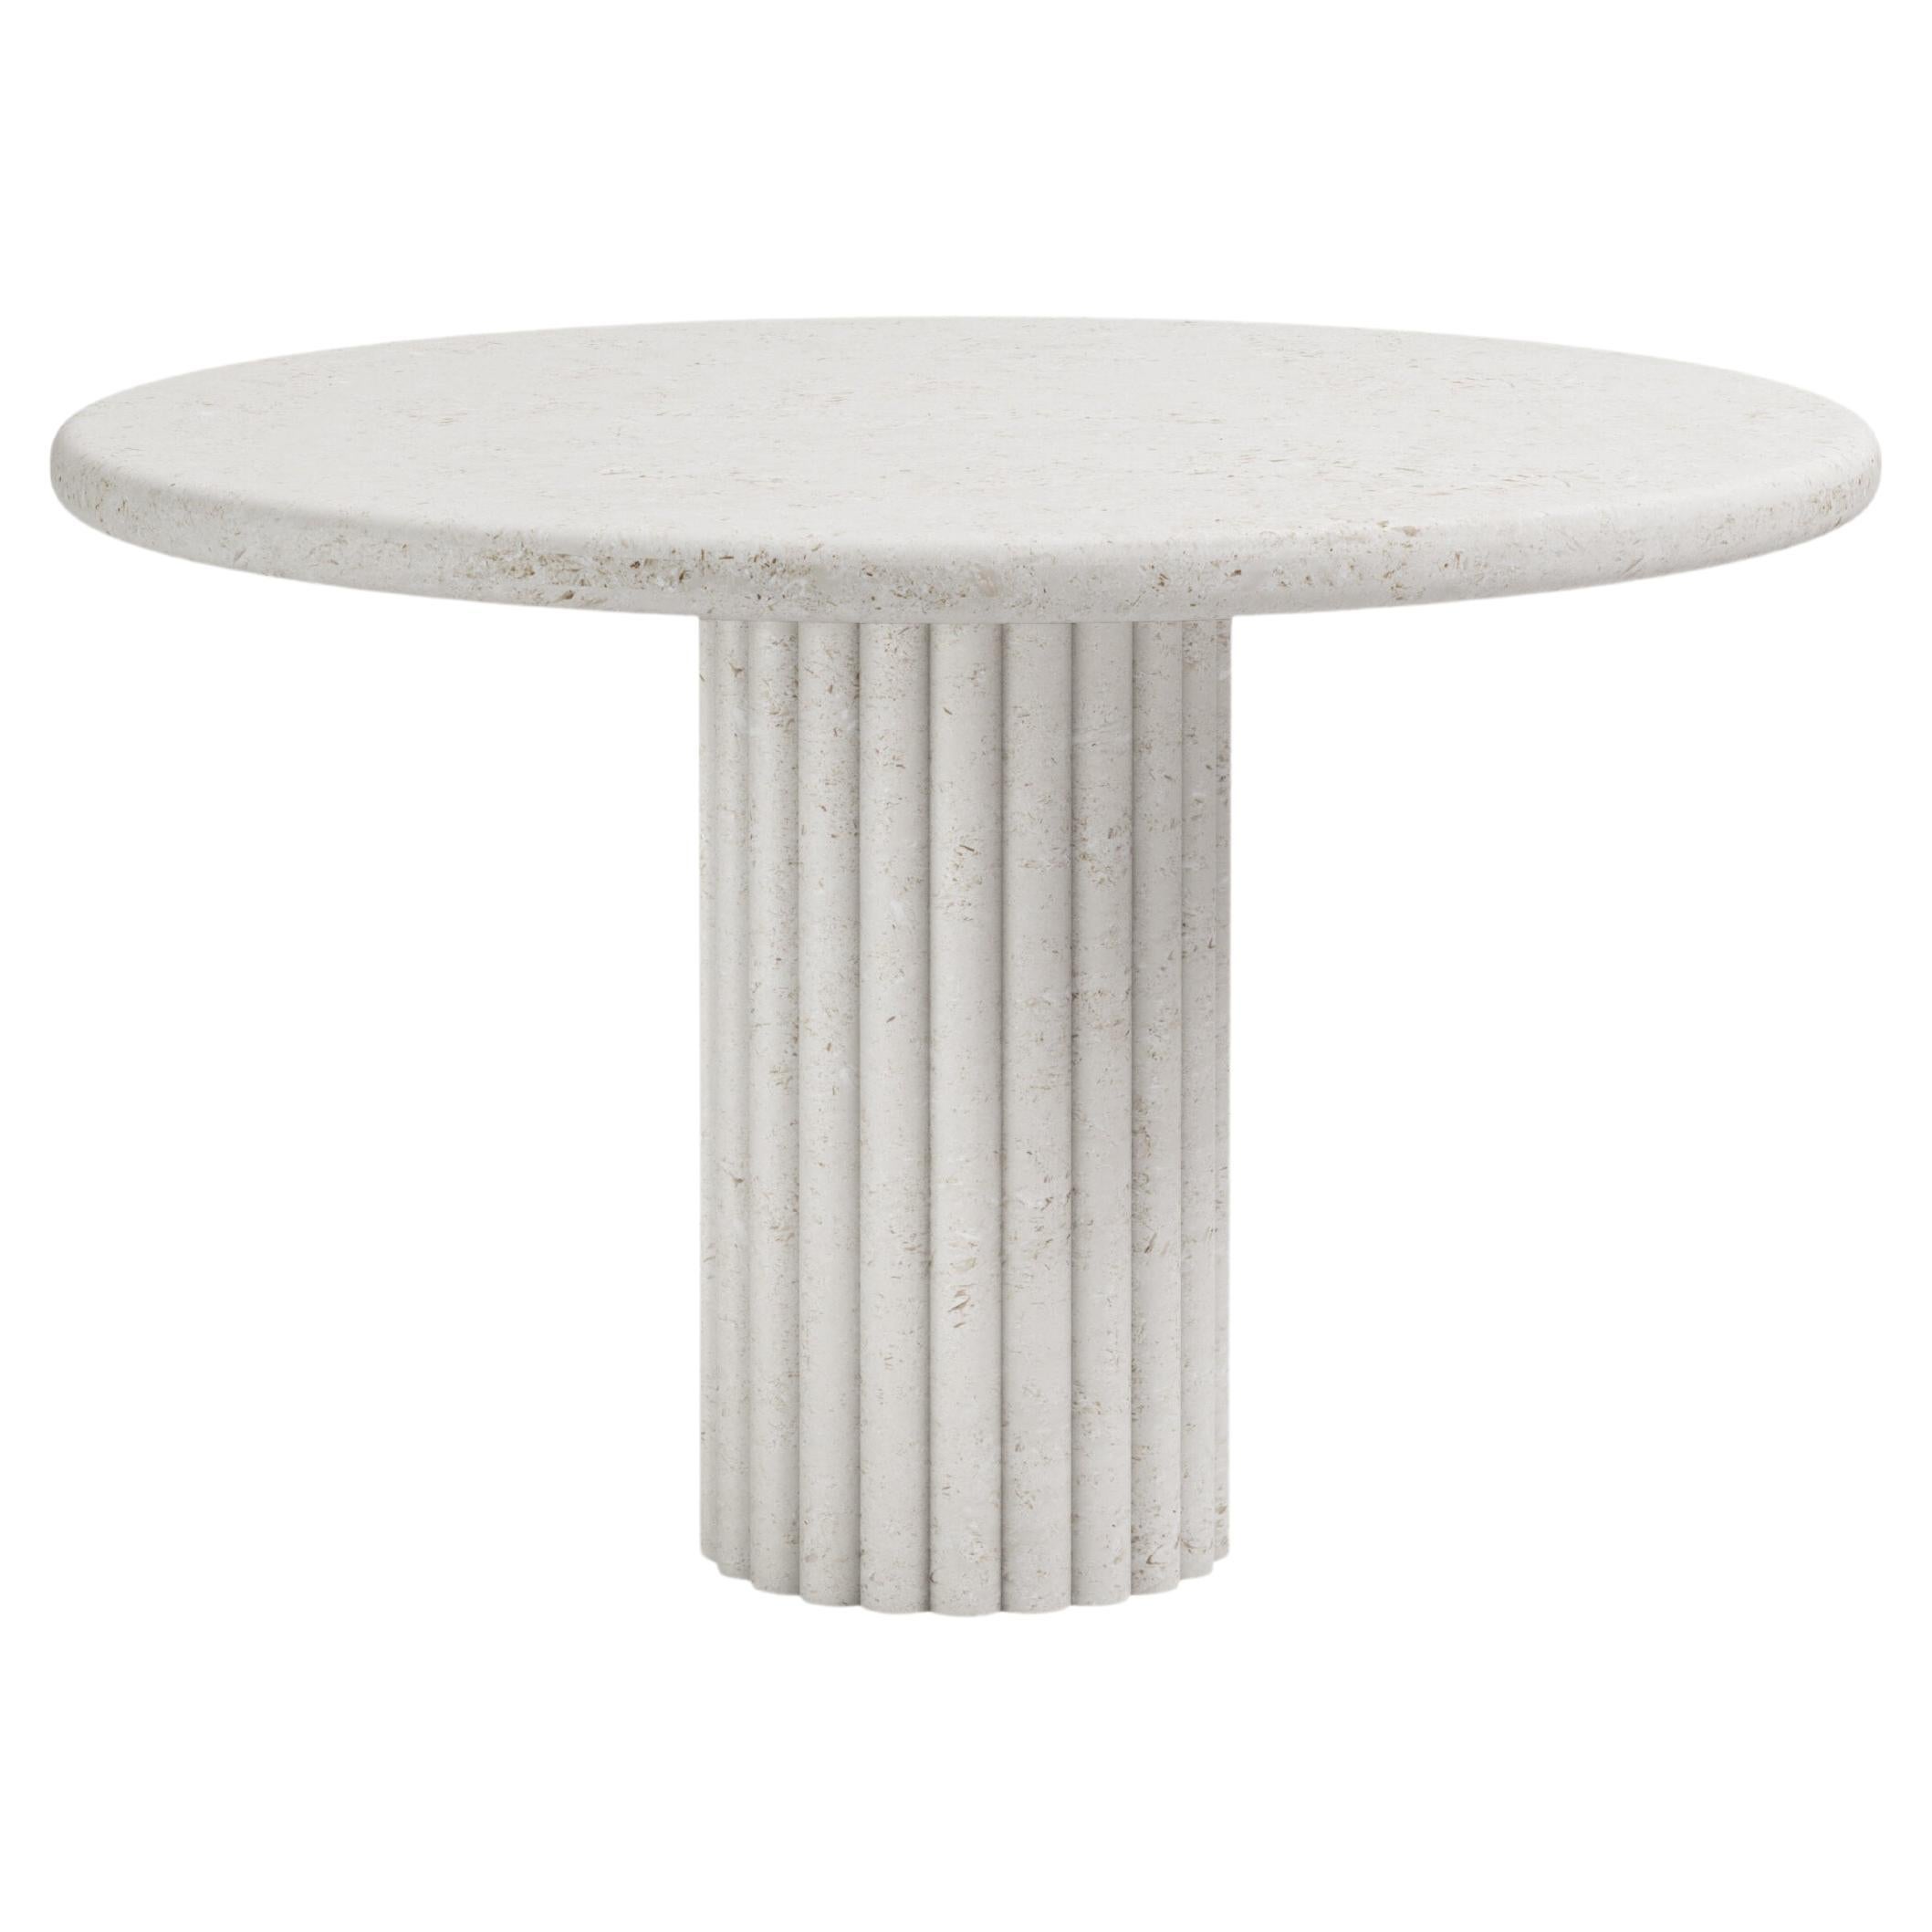 FORM(LA) Fluta Round Dining Table 36”L x 36”W x 30”H Limestone Oceano For Sale